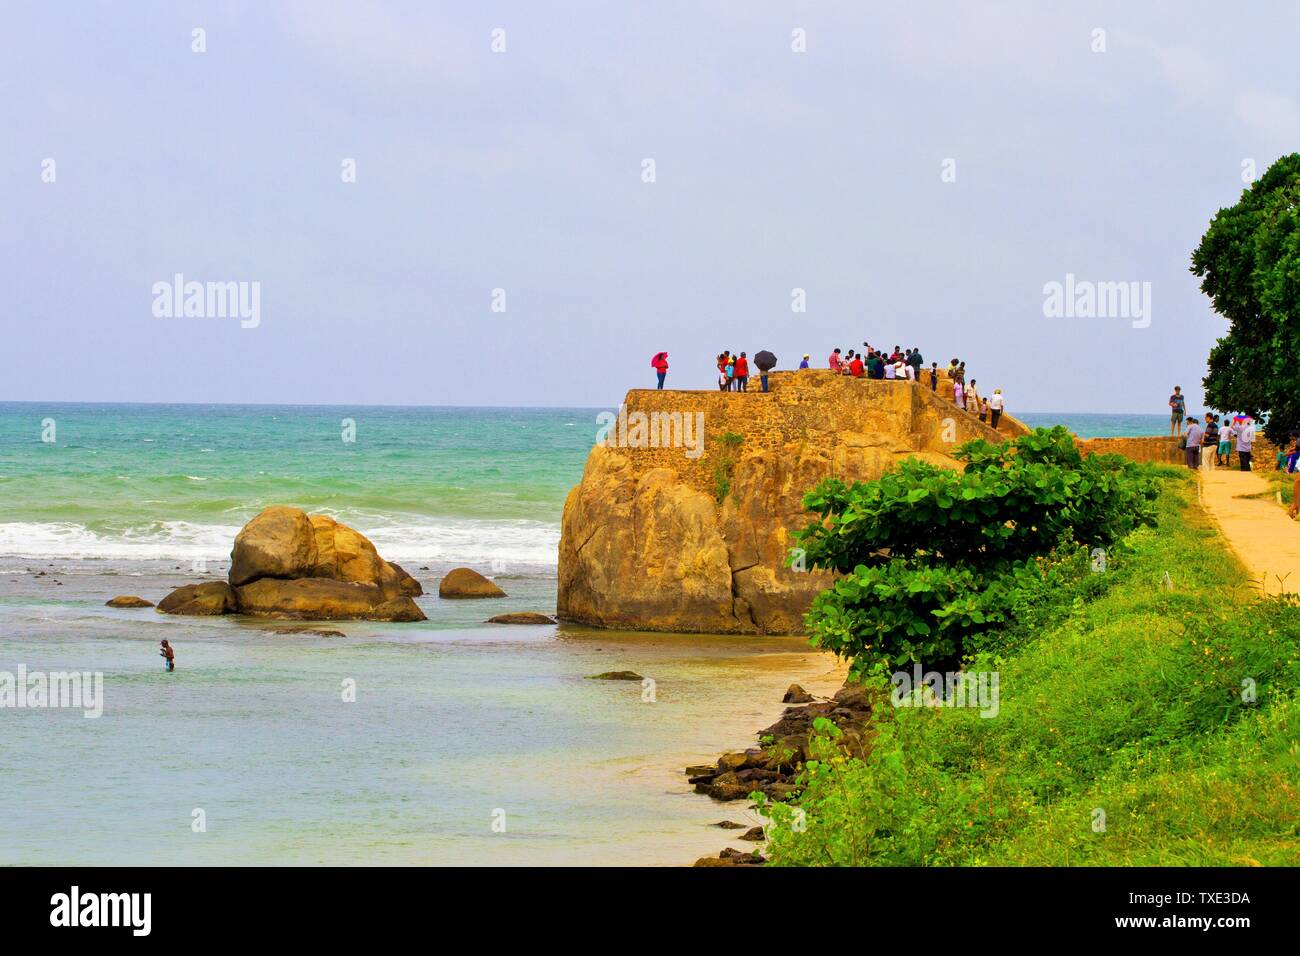 People on promenade inside Dutch fort, Galle, Sri Lanka Stock Photo